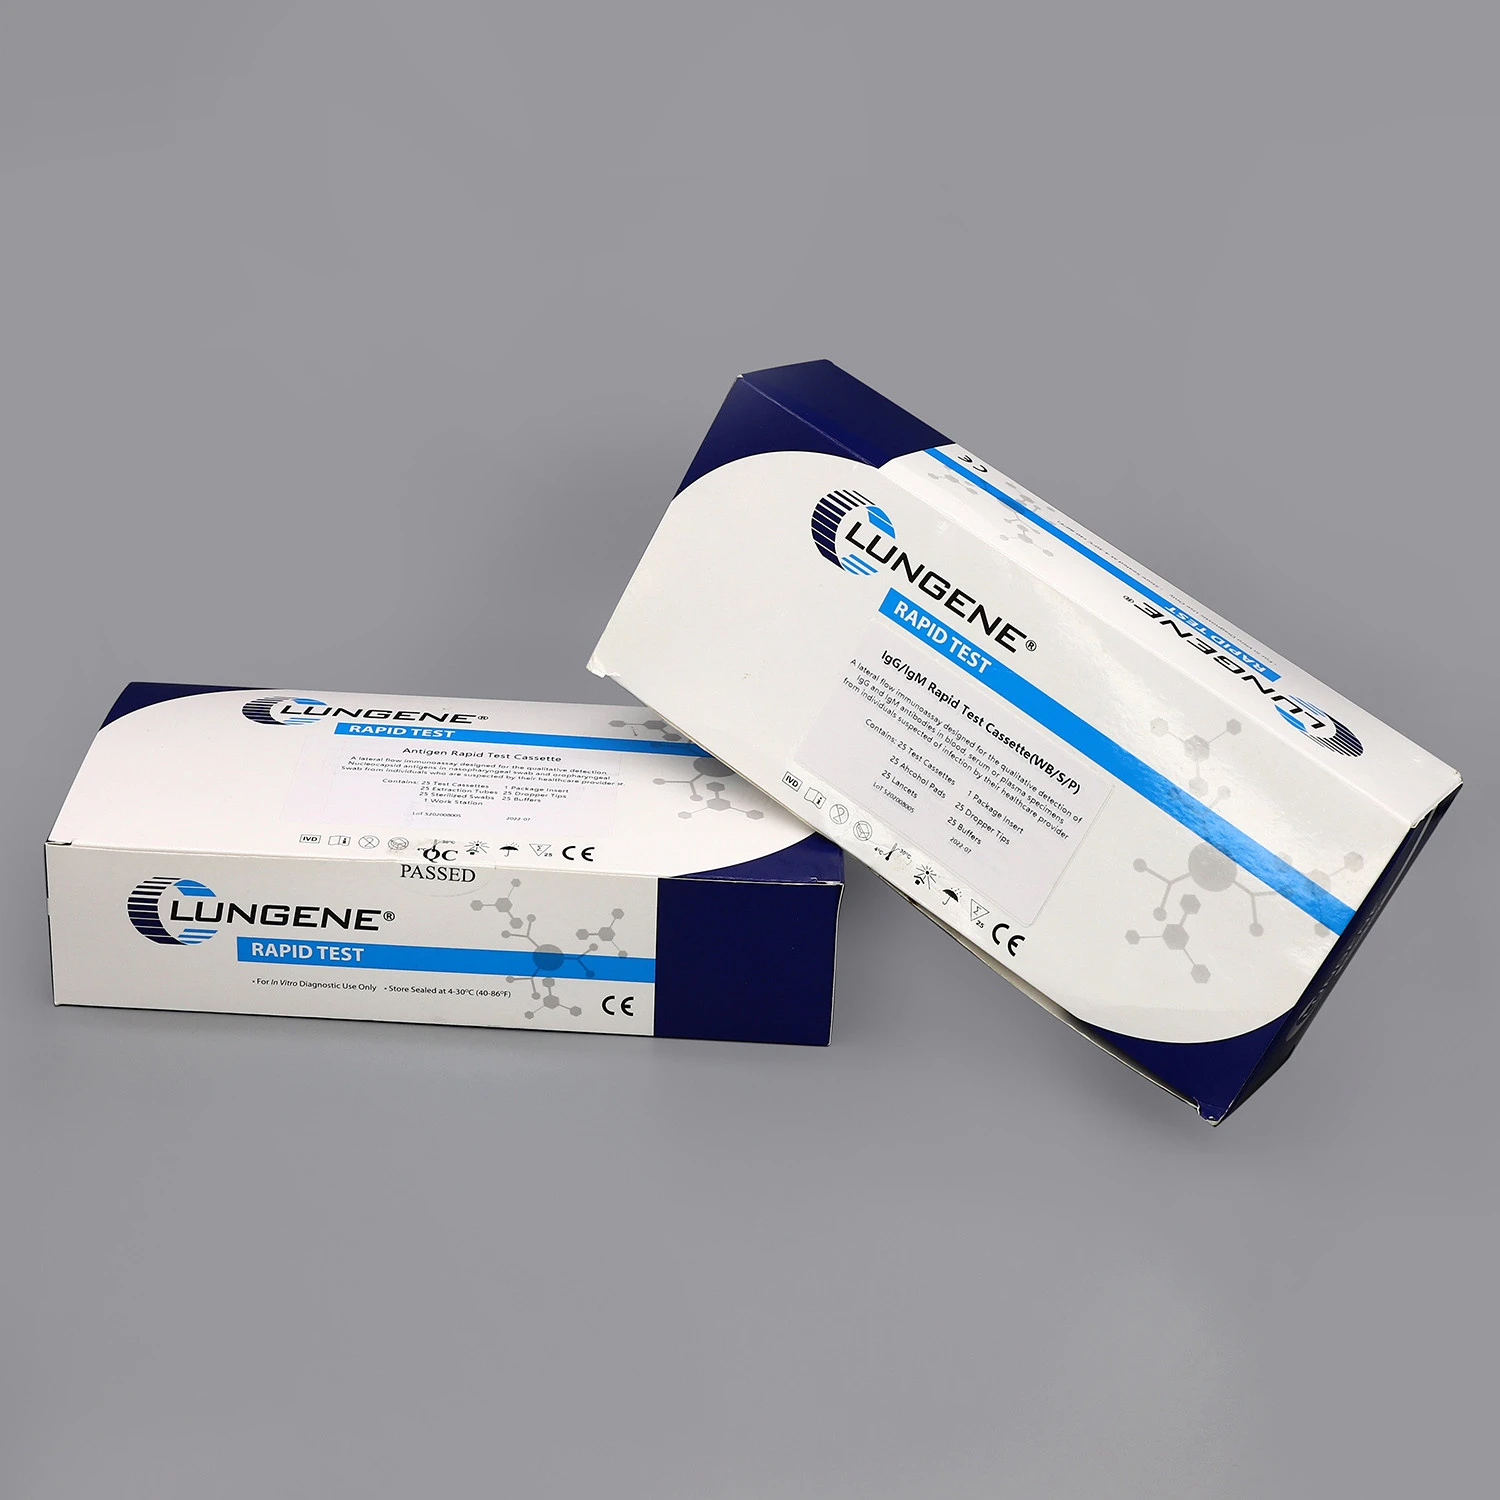 Clungene clongene lungene one step AG swab antigen diagnostic rapid test cassette test kit